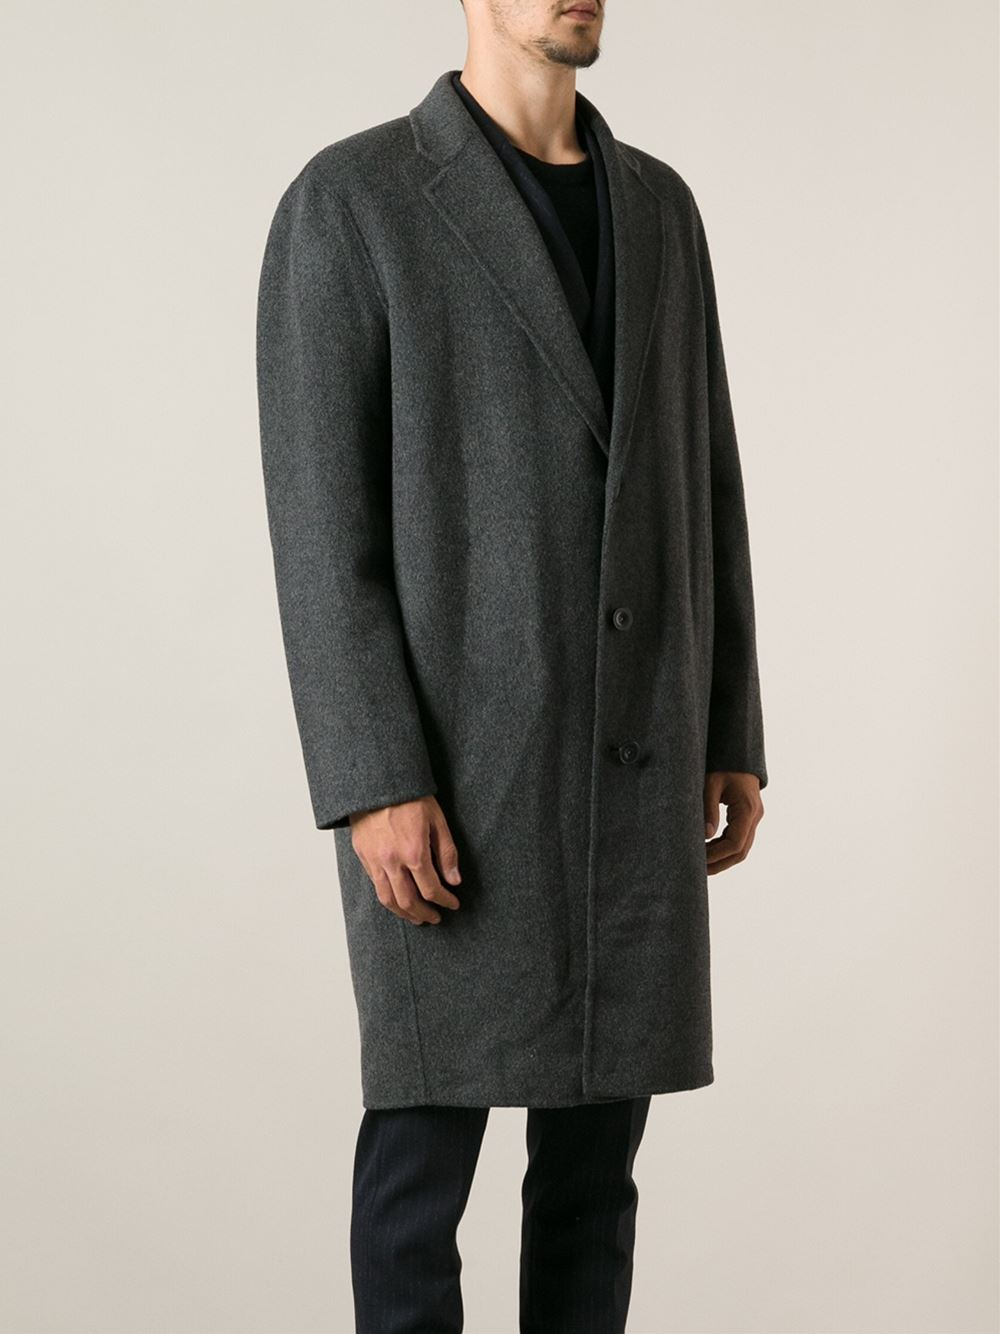 Acne Studios Charles Coat in Grey (Gray) for Men - Lyst